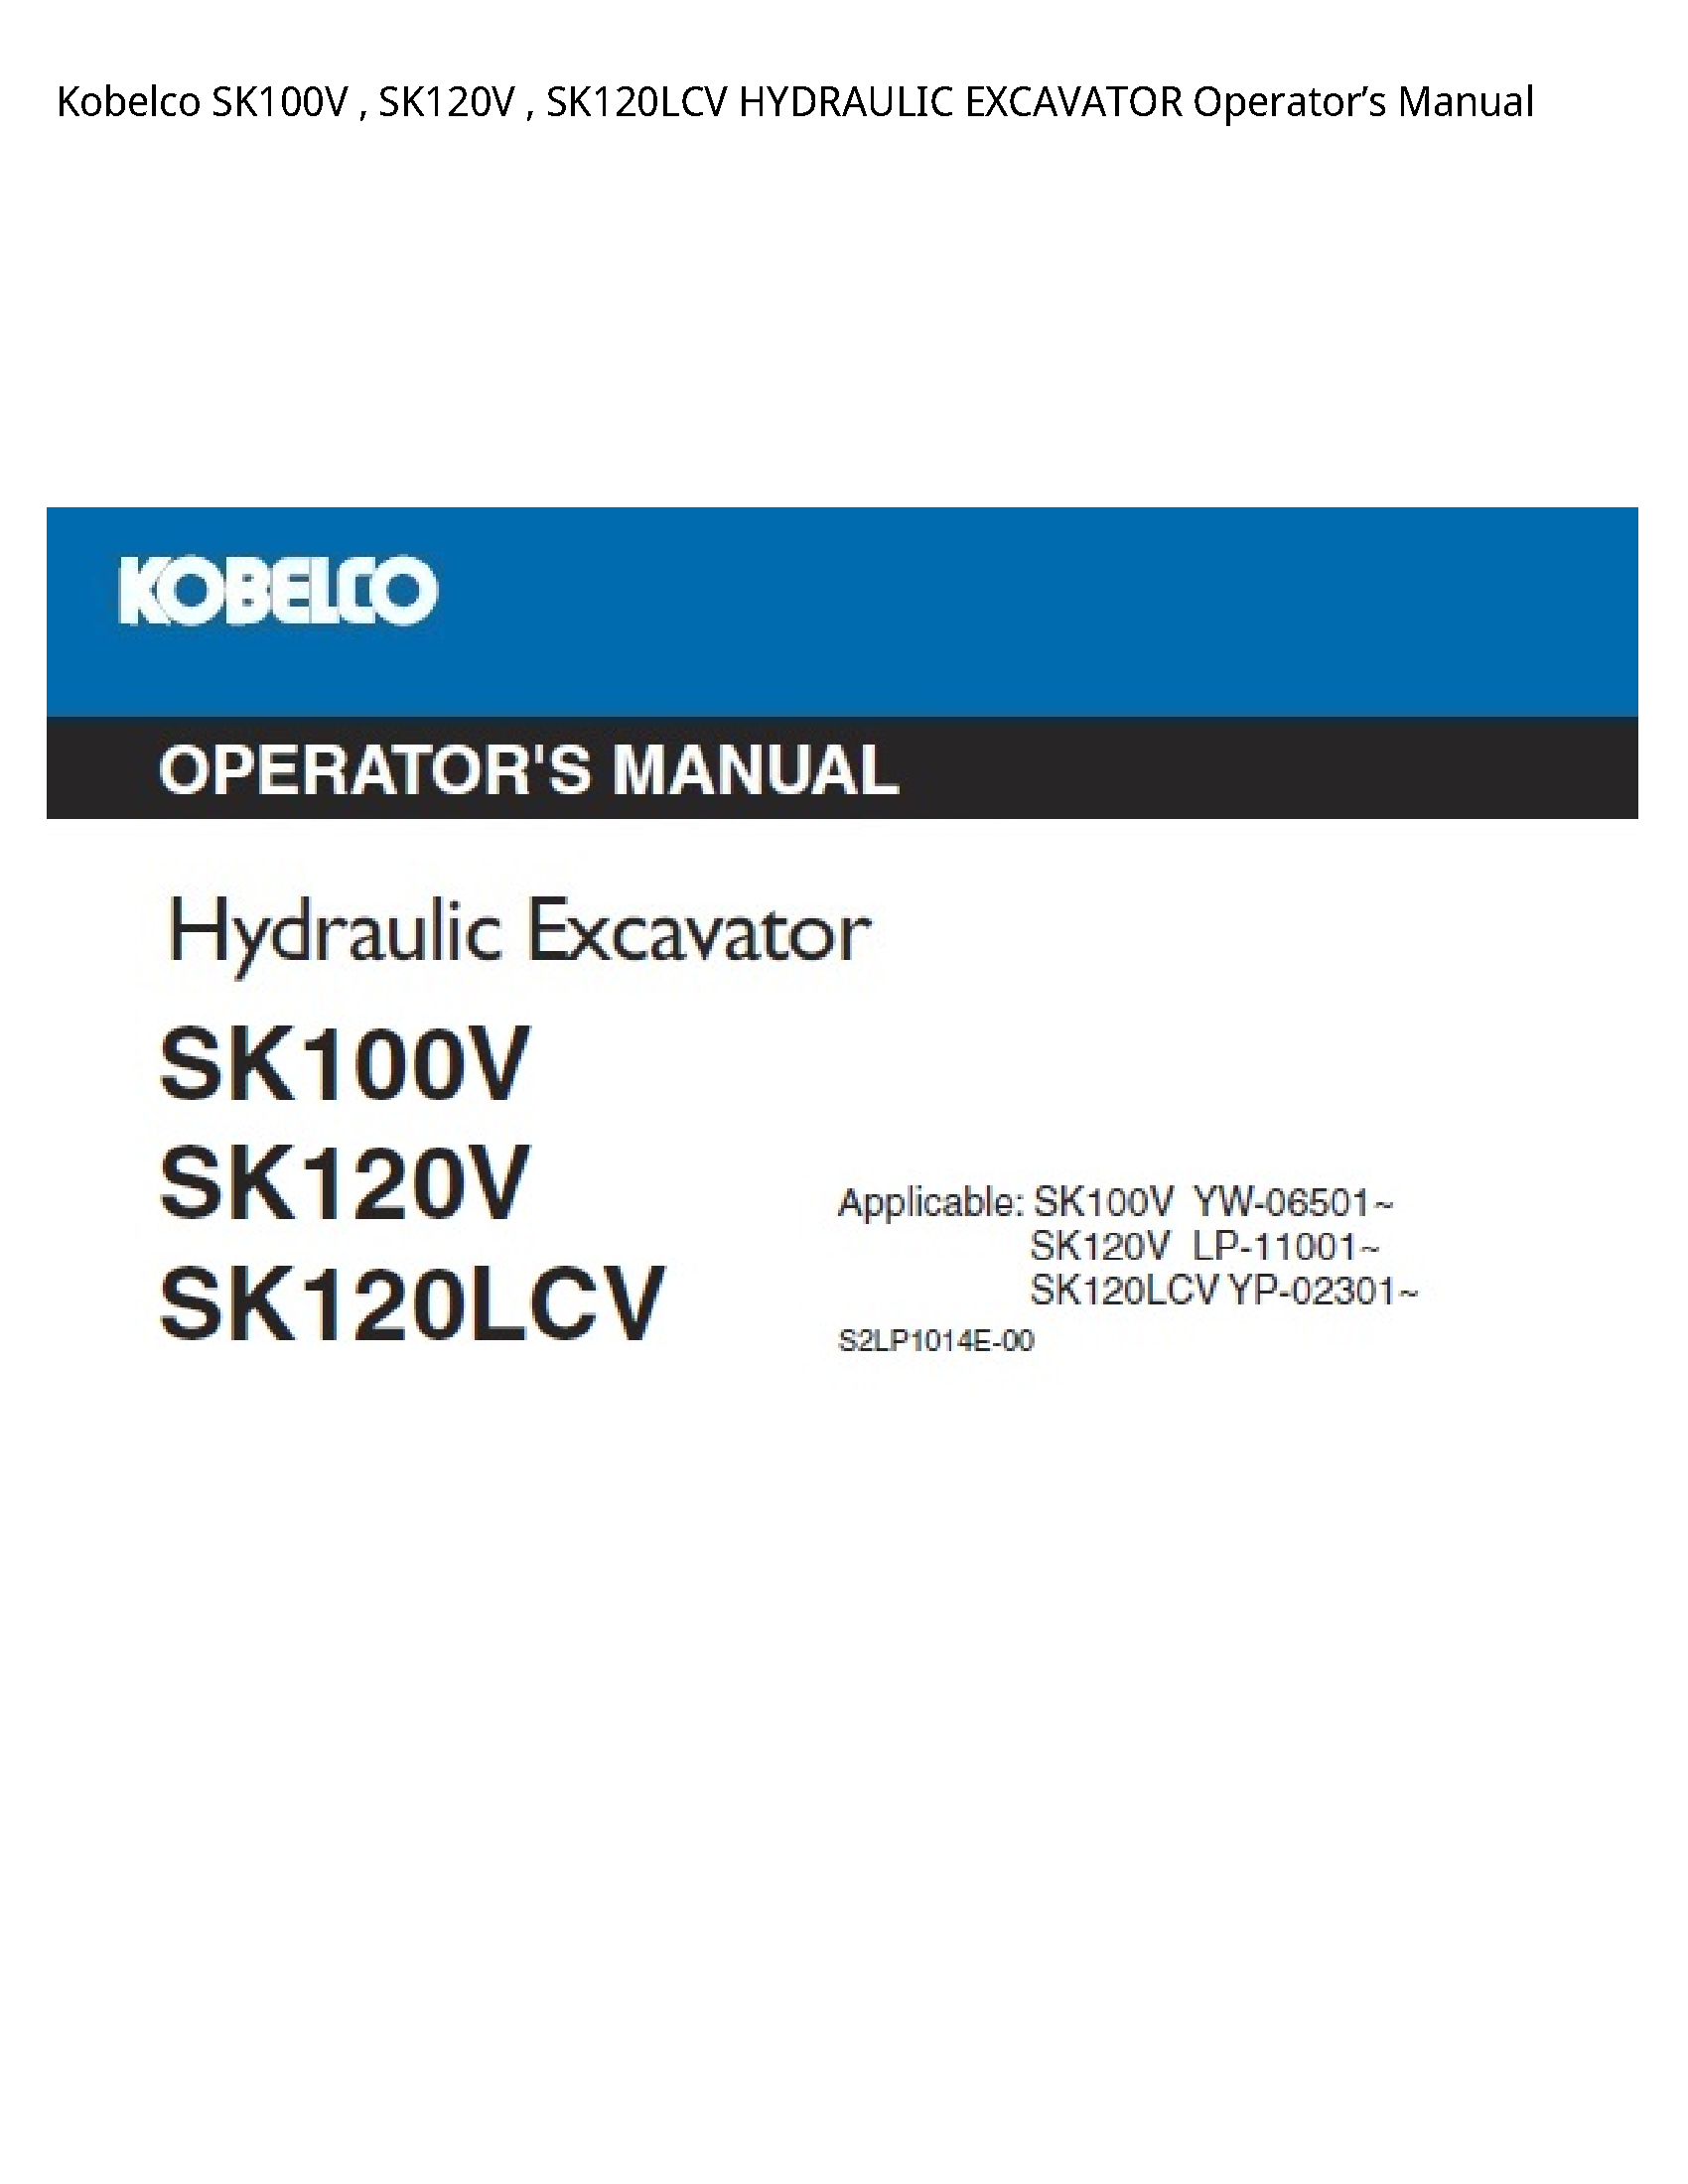 Kobelco SK100V HYDRAULIC EXCAVATOR Operator’s manual